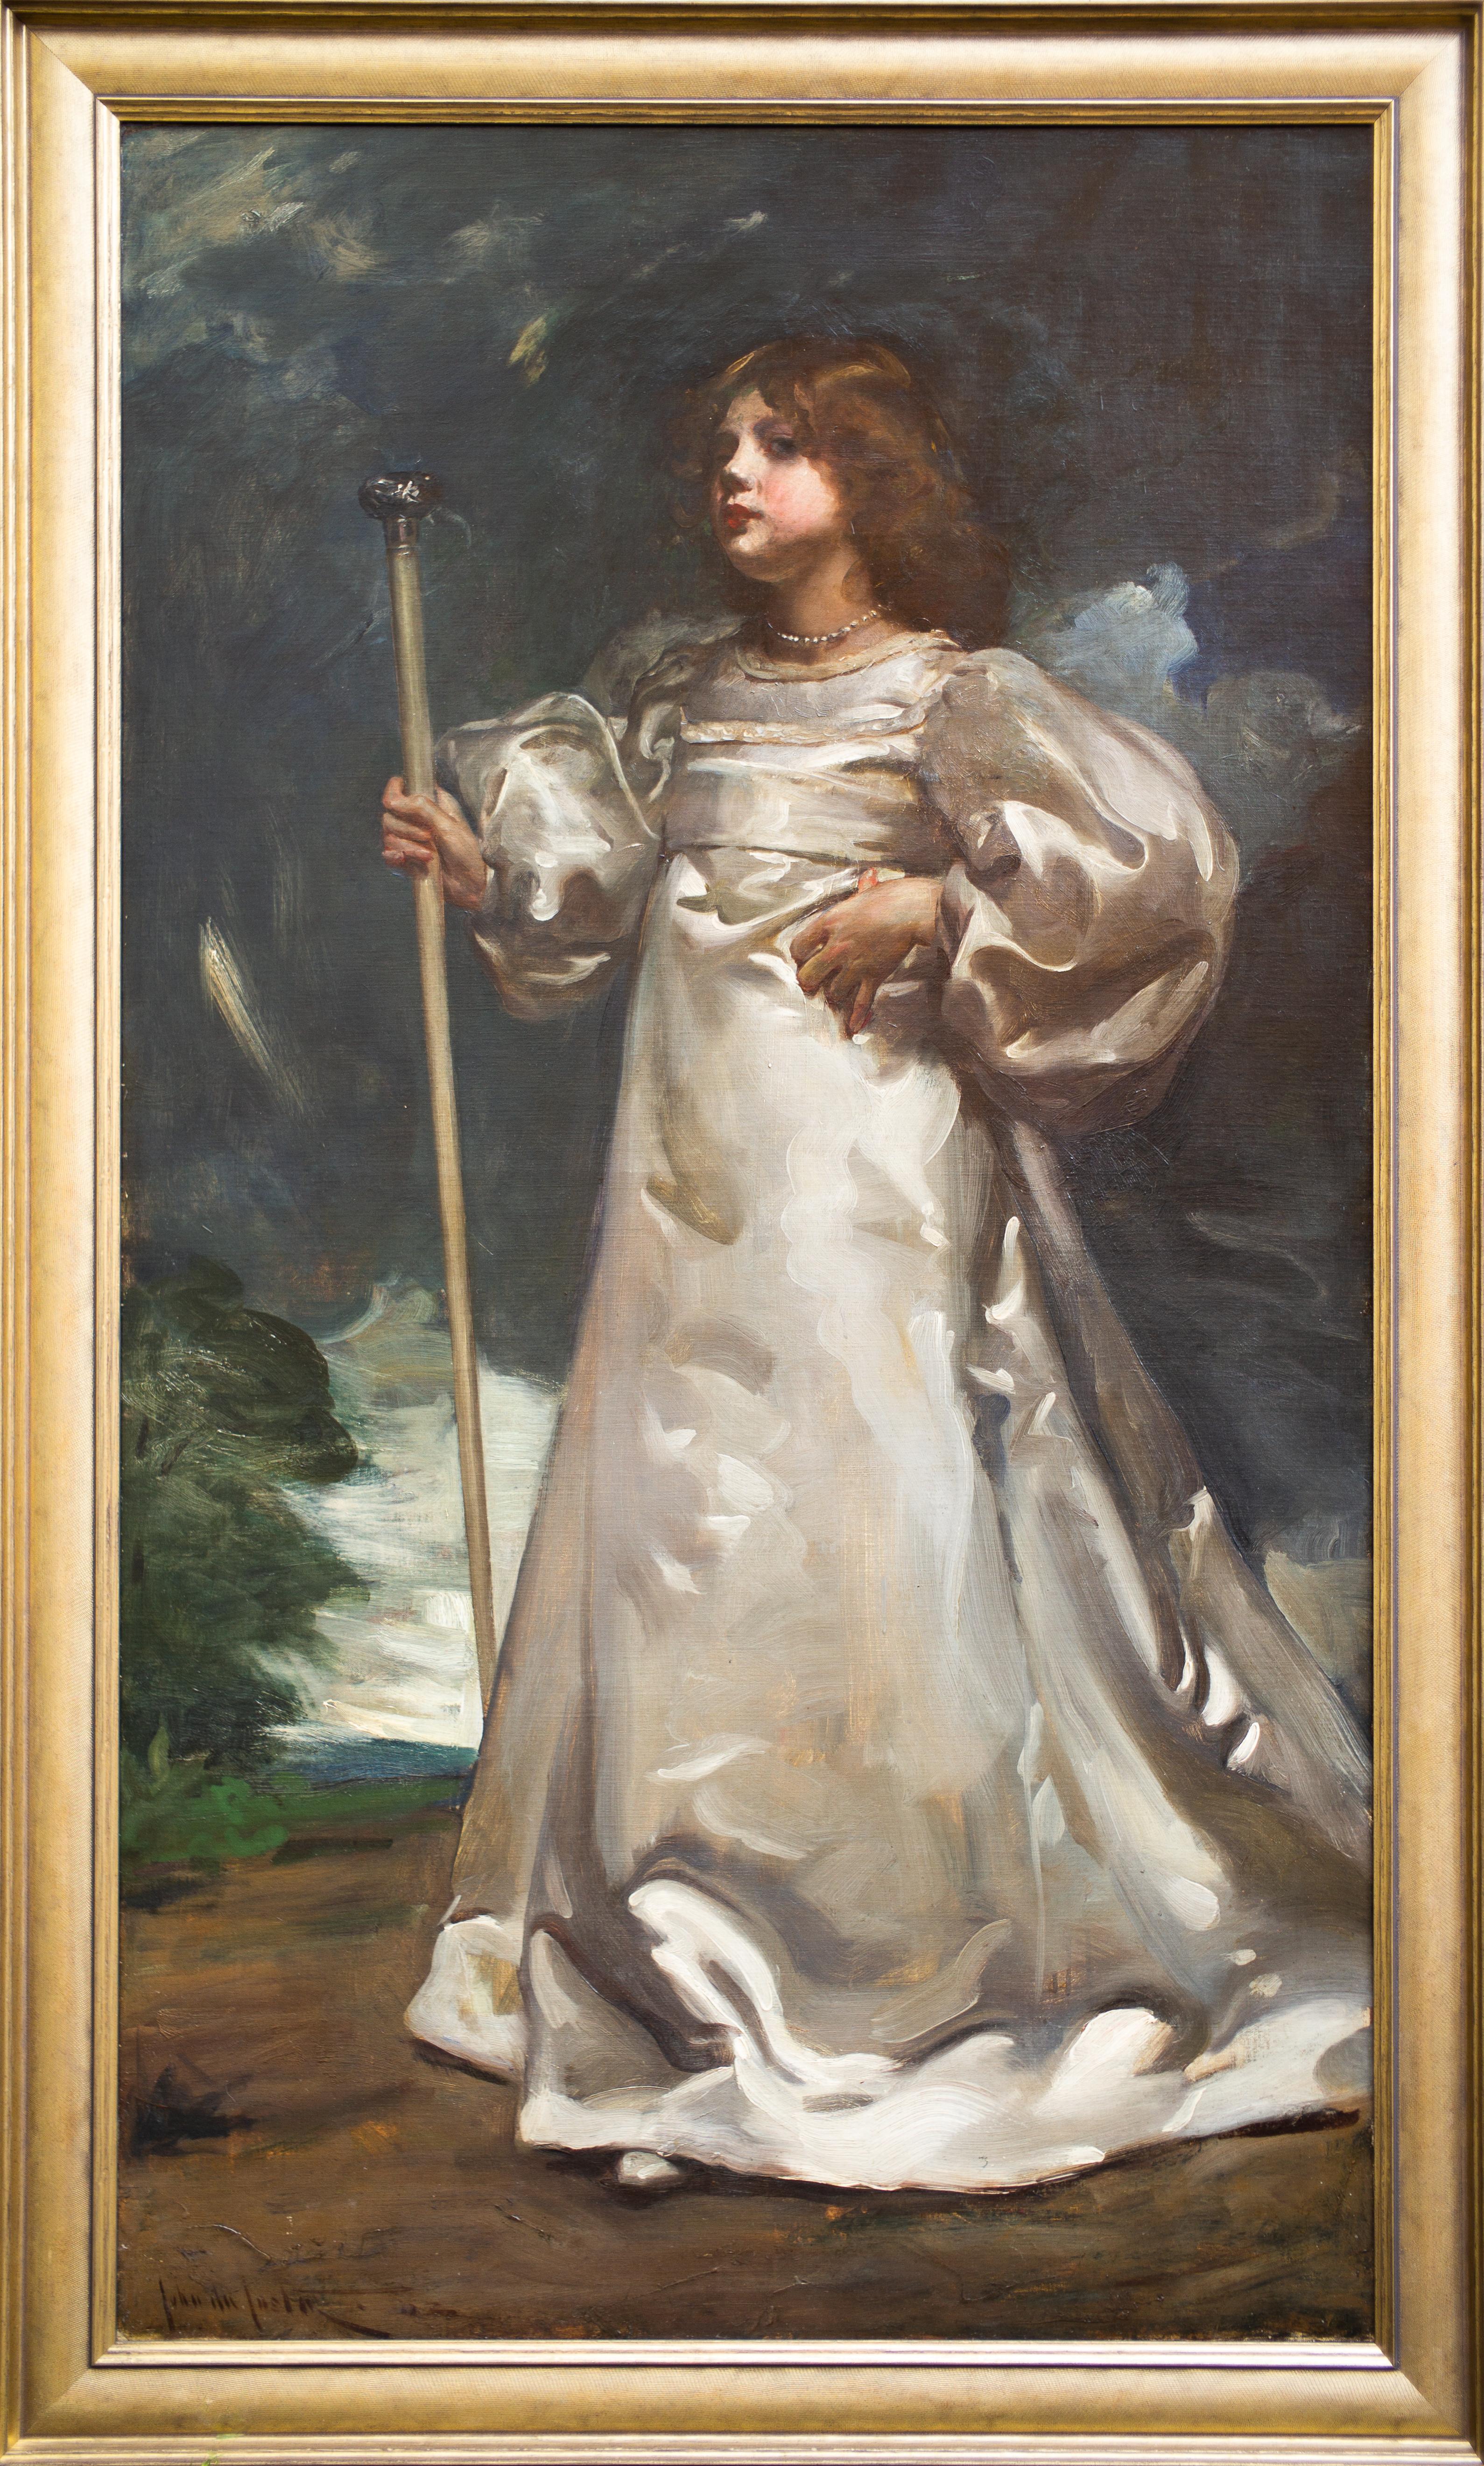 John da Costa  Portrait Painting - The story of the Belle époque in one portrait by John da Costa